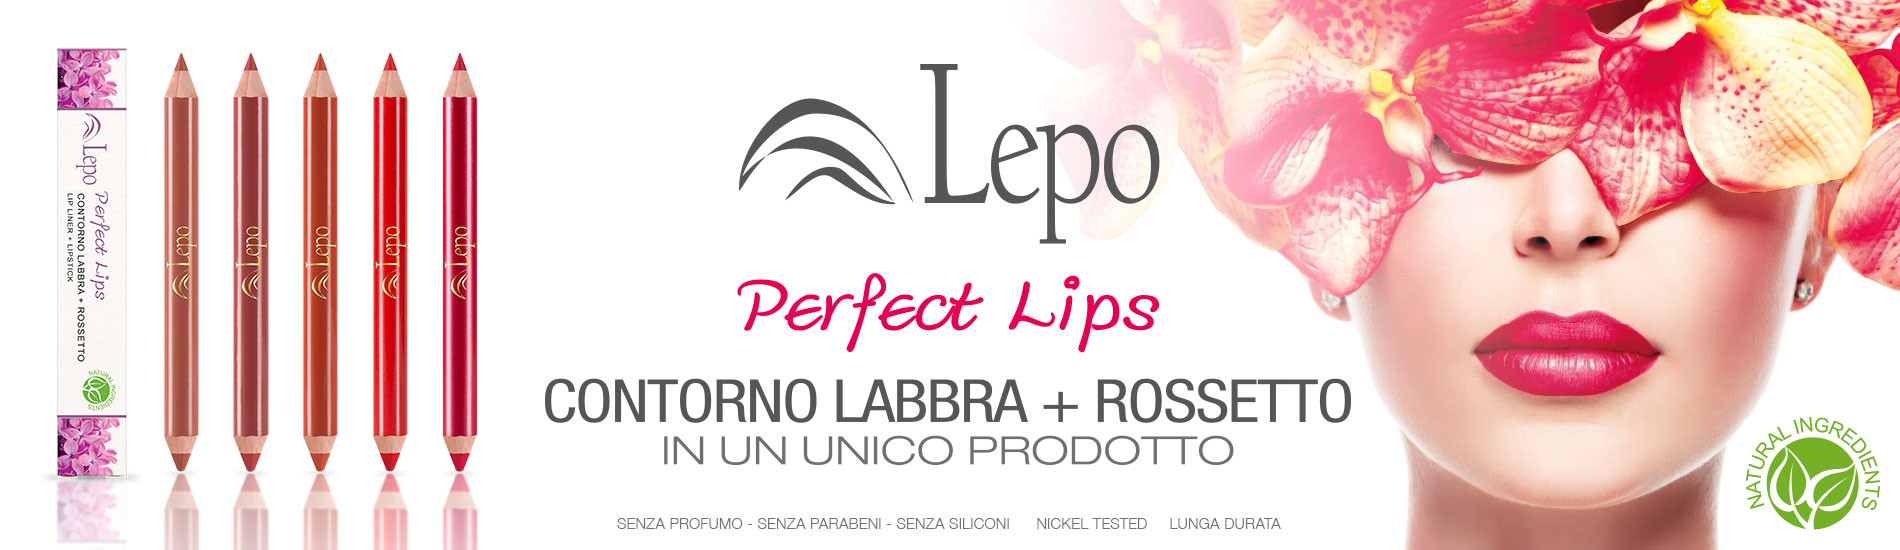 LEPO_perfect lips